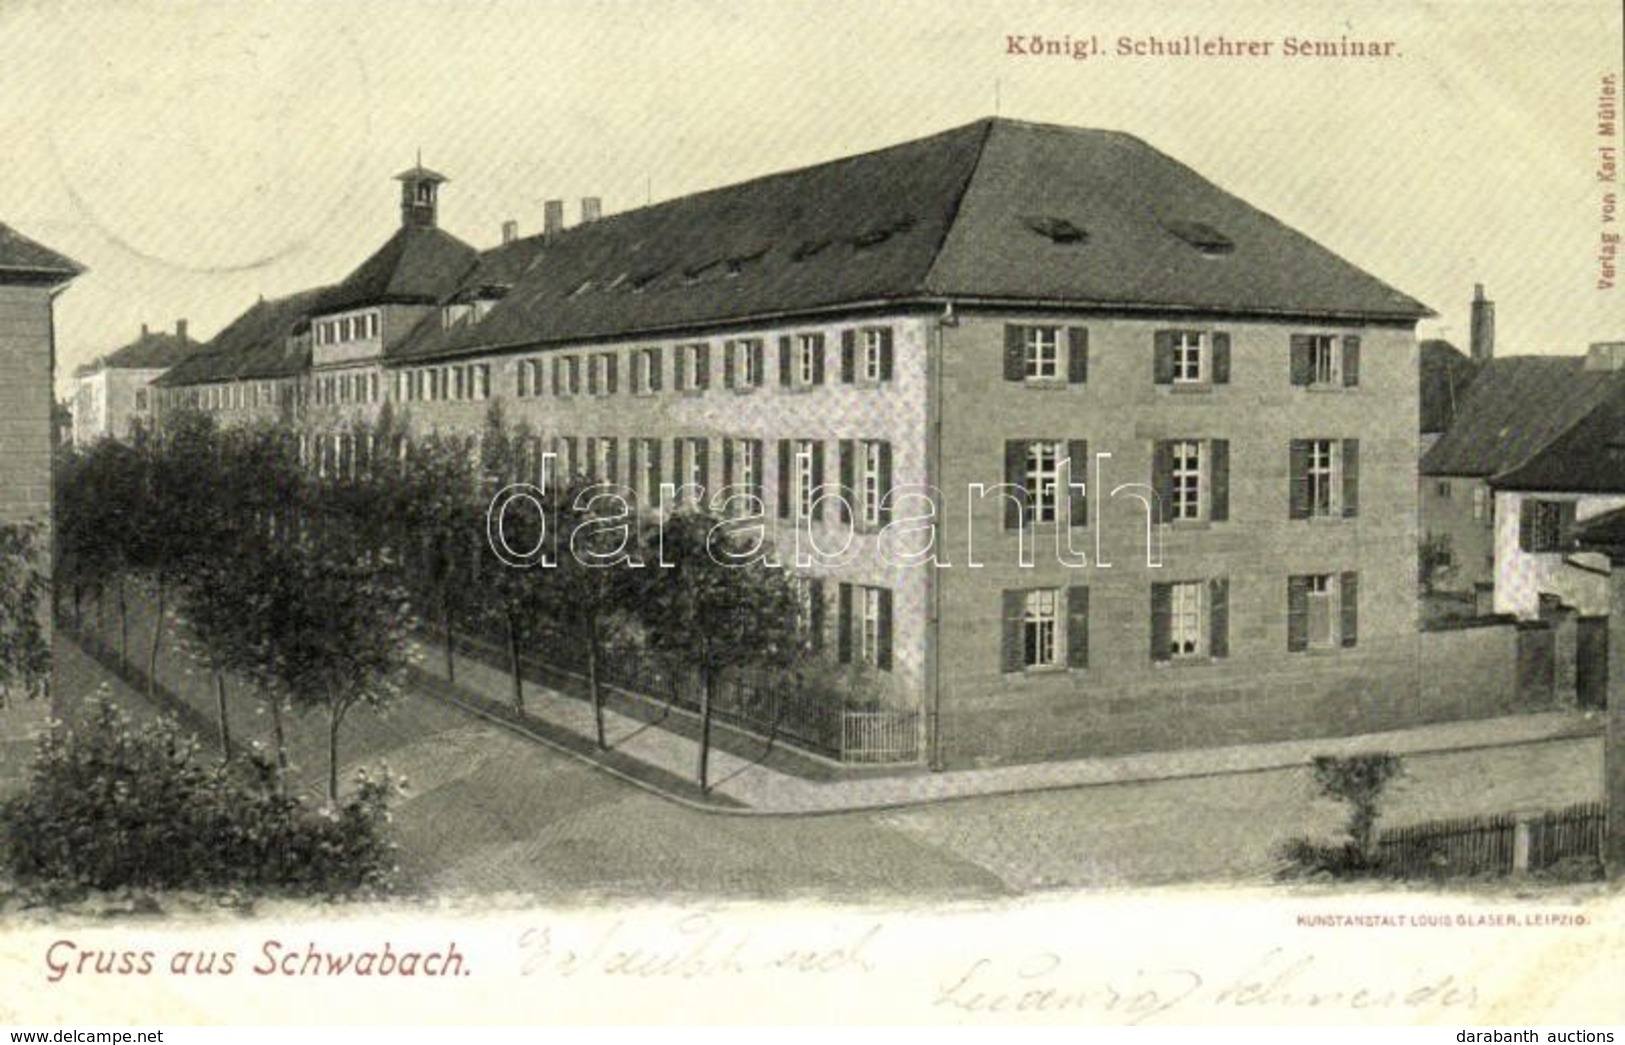 T2 Schwabach, Königl. Schullehrer Seminar; Kunstanstalt Louis Glaser / Teacher Training School - Unclassified